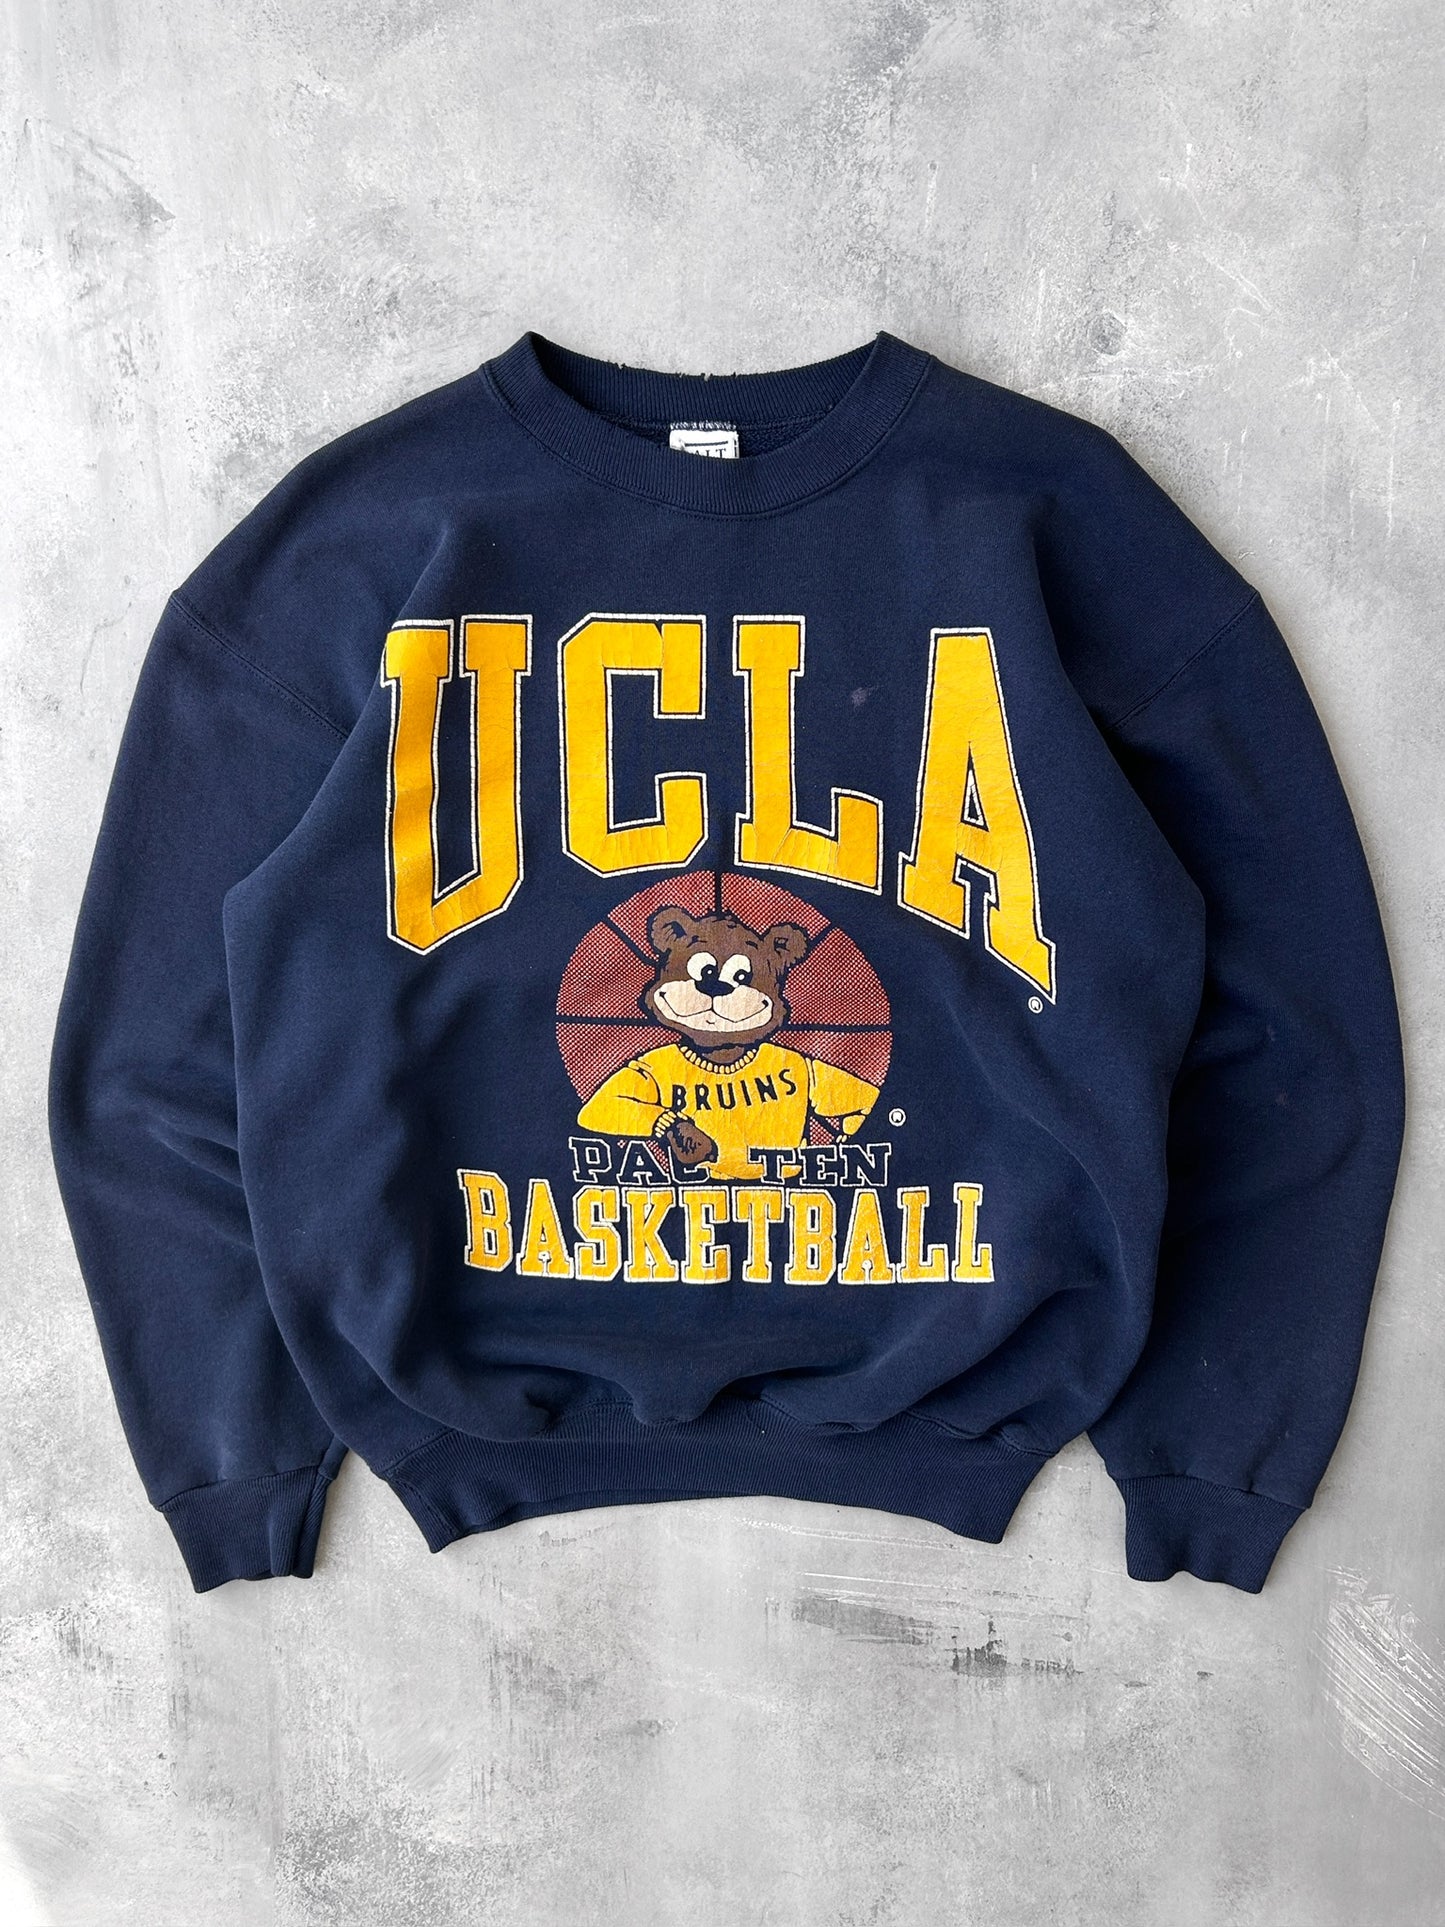 UCLA Basketball Sweatshirt 90's - Medium